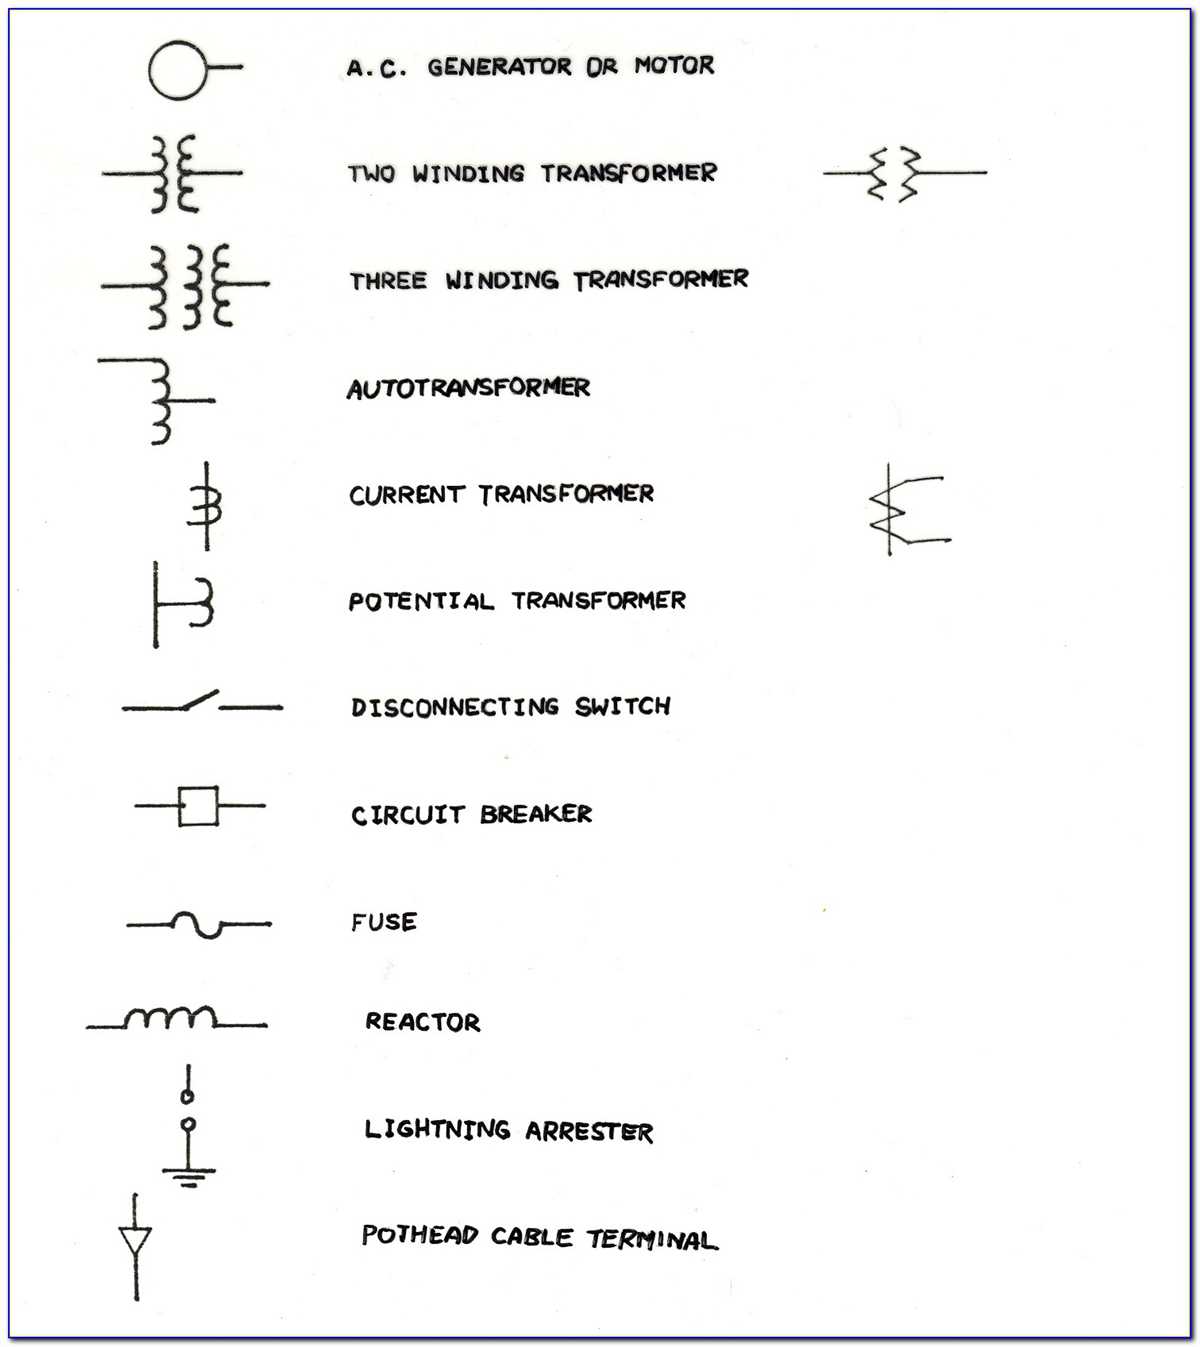 4. Motor Symbols: